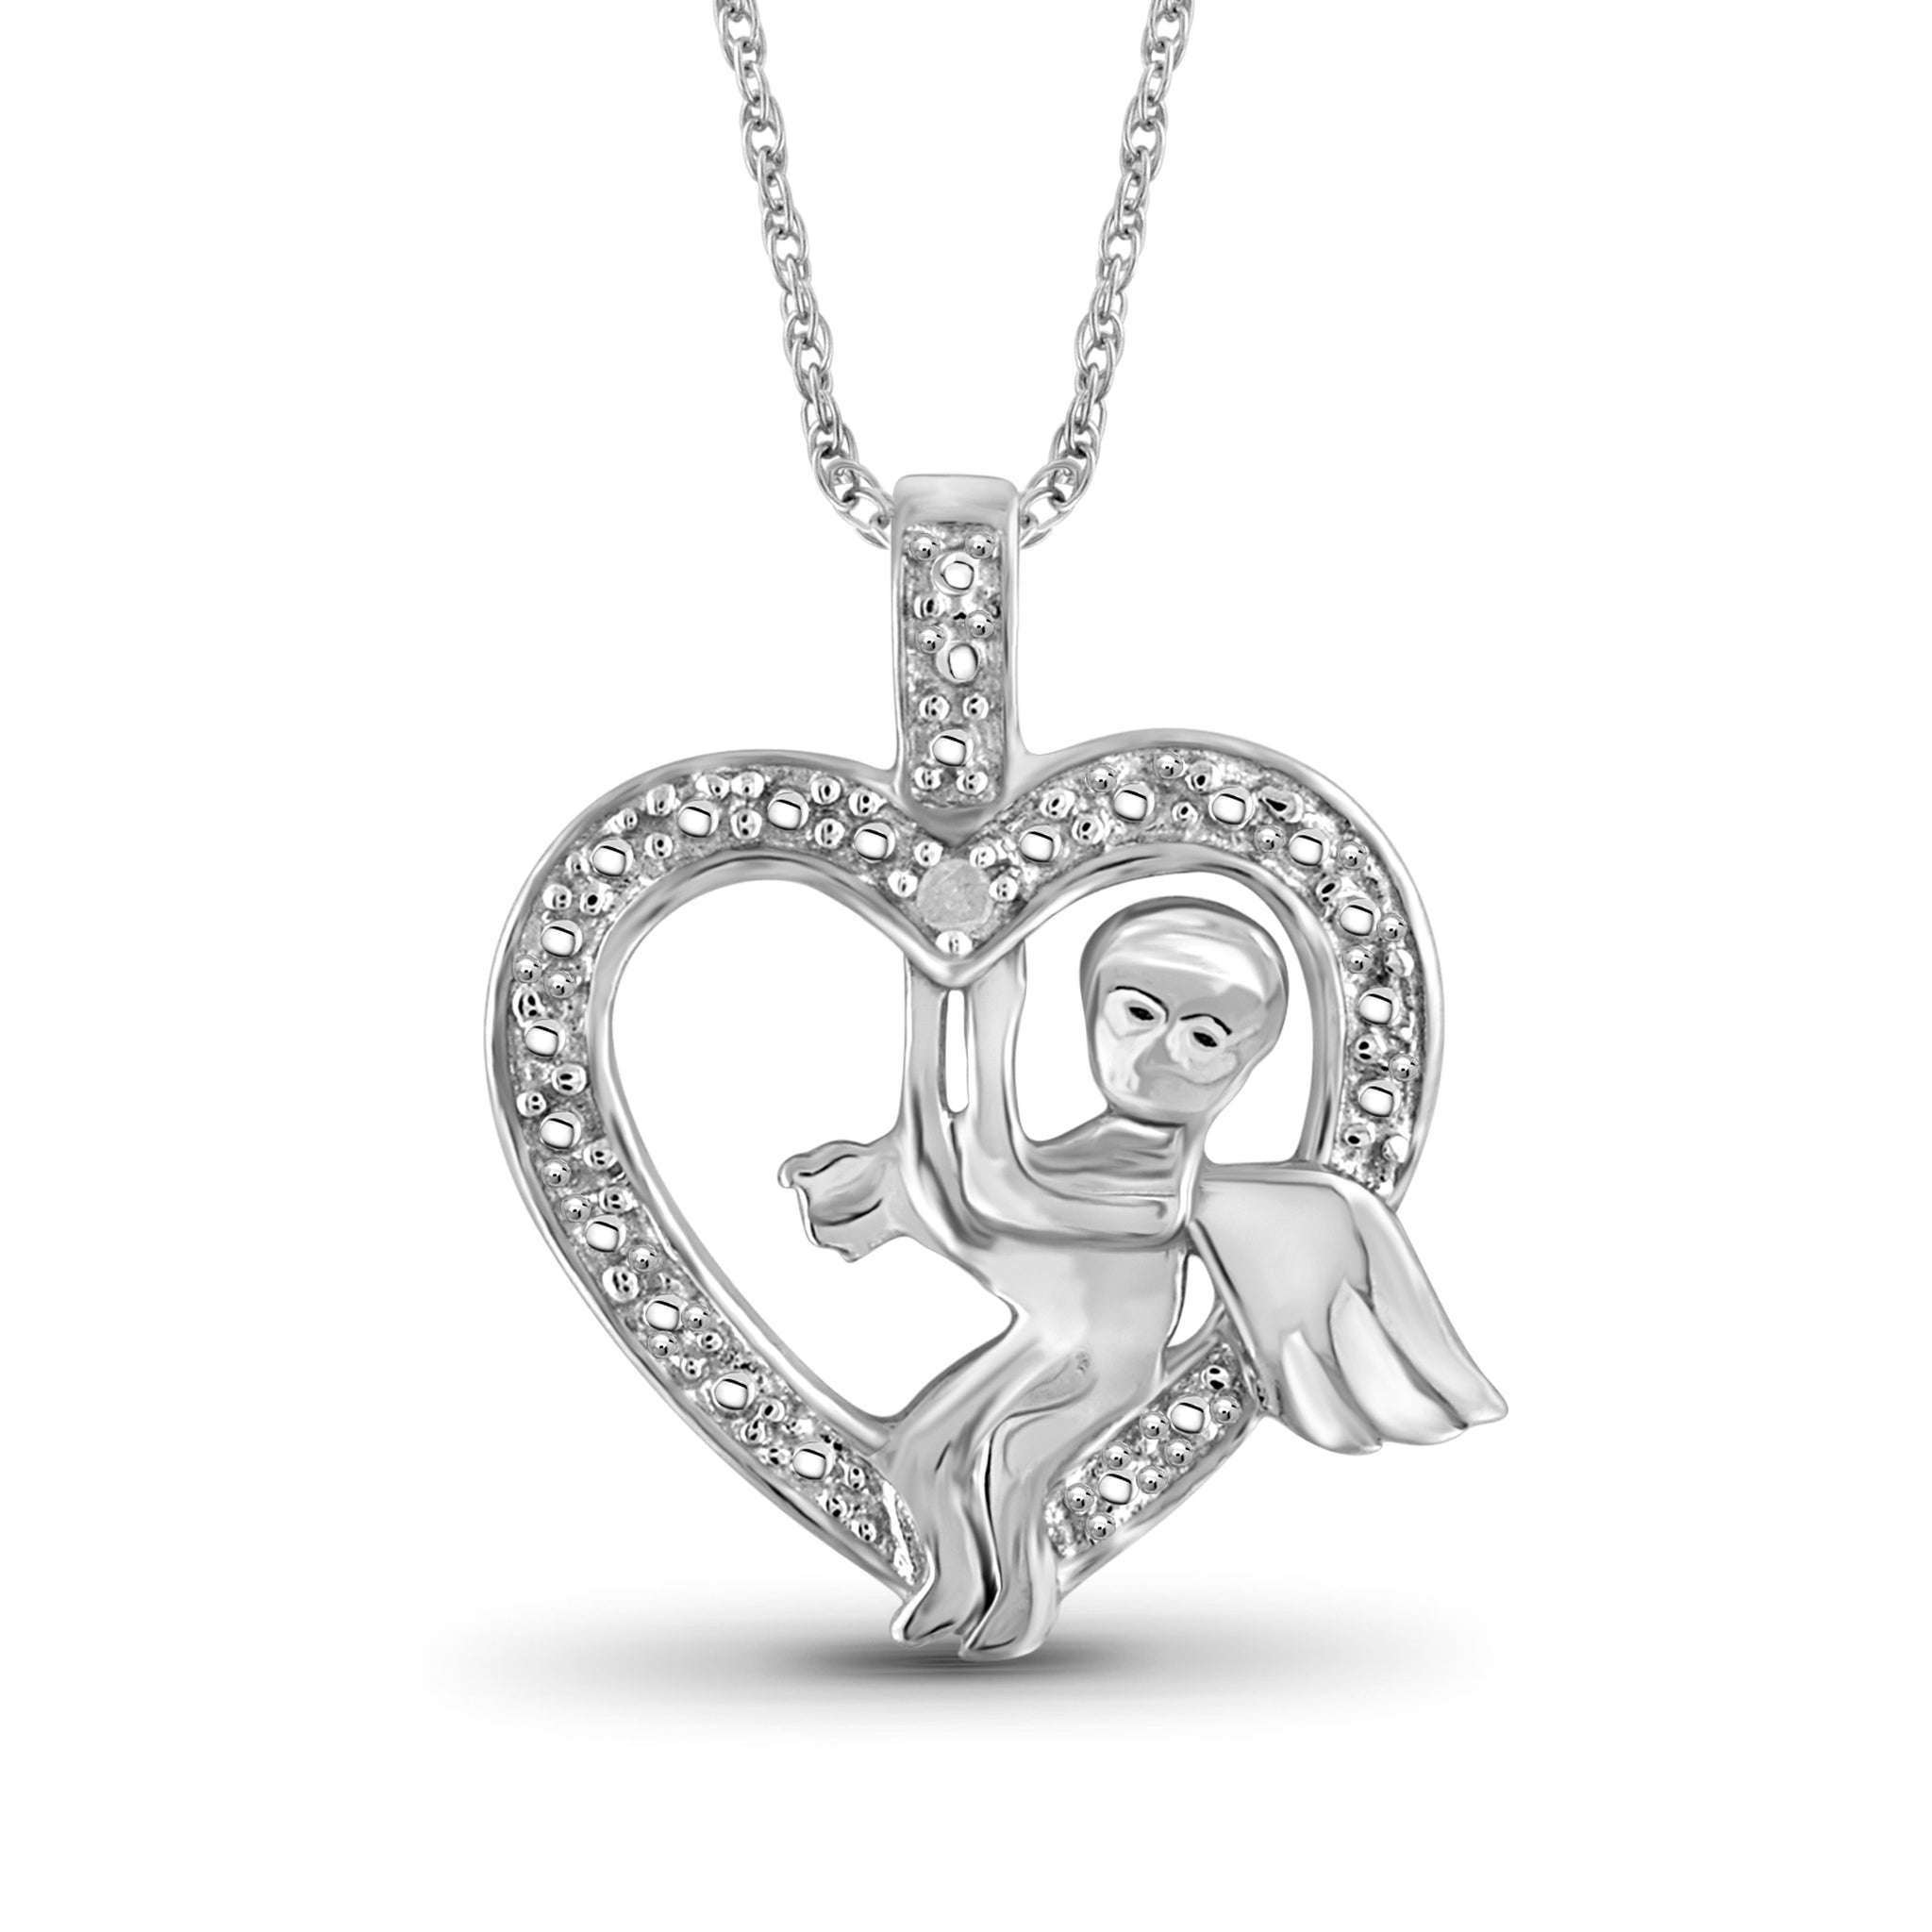 JewelonFire Accent White Diamond Heart Pendant in Sterling Silver